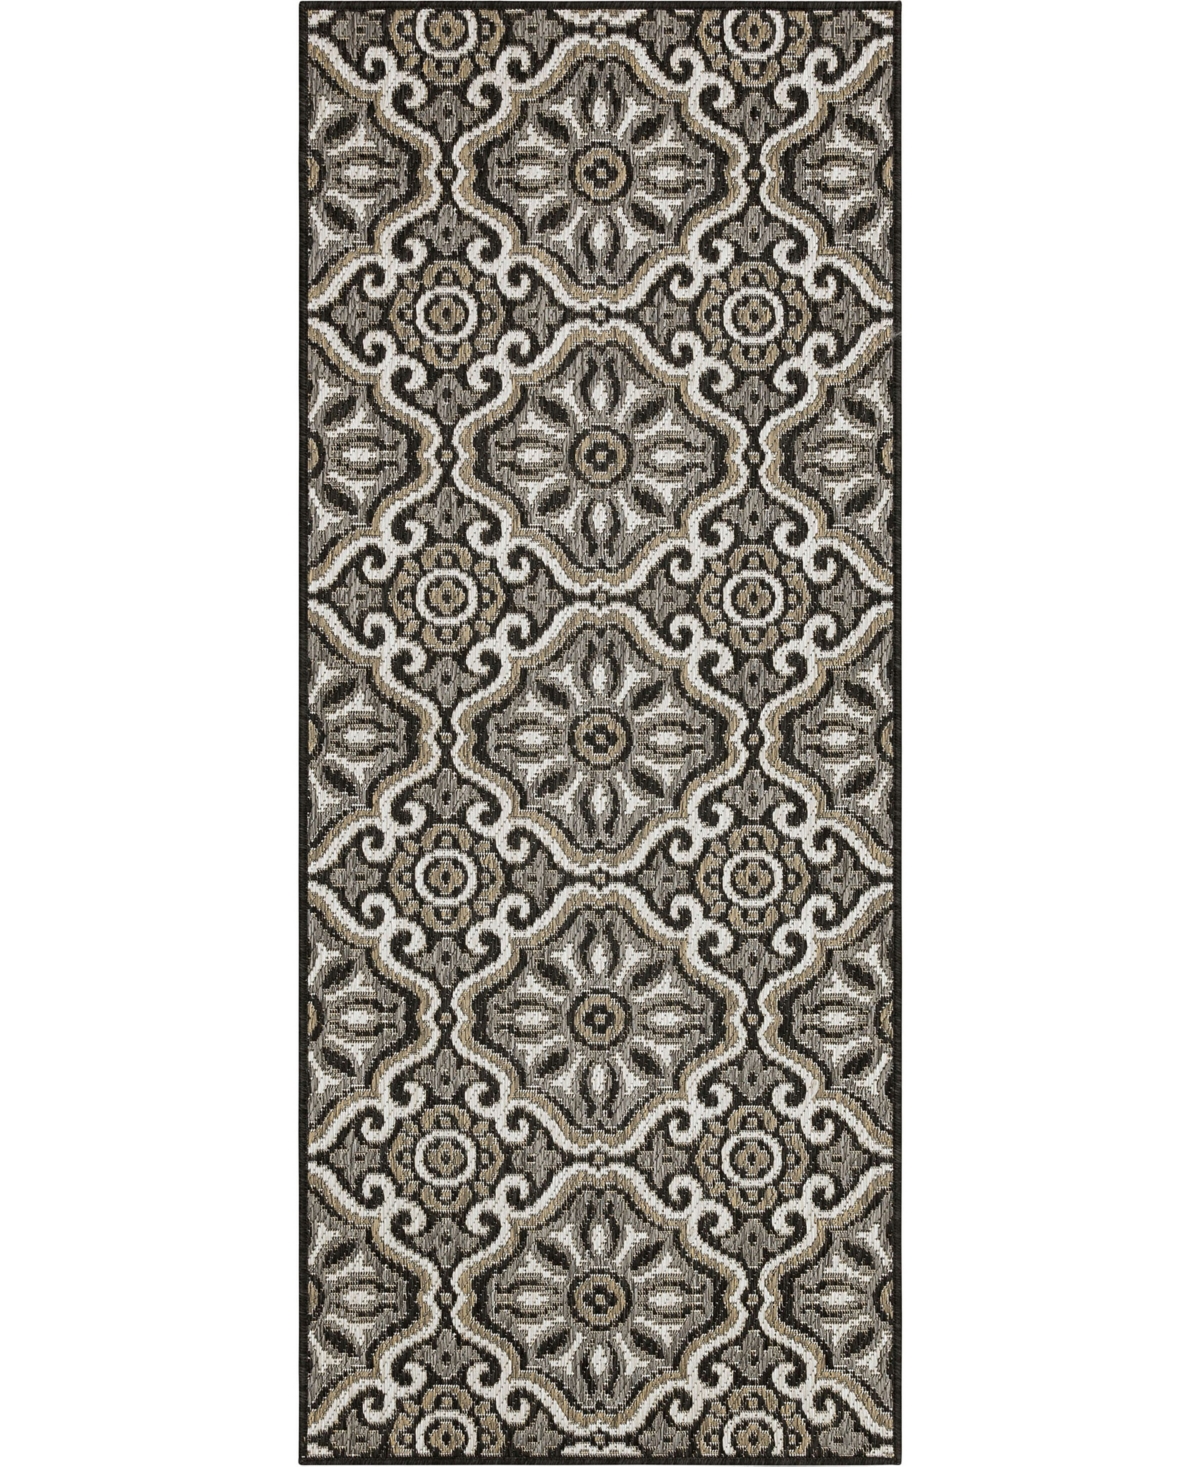 Mohawk Malibu Outdoor Portugal Tile 2'5" X 6' Area Rug In Charcoal